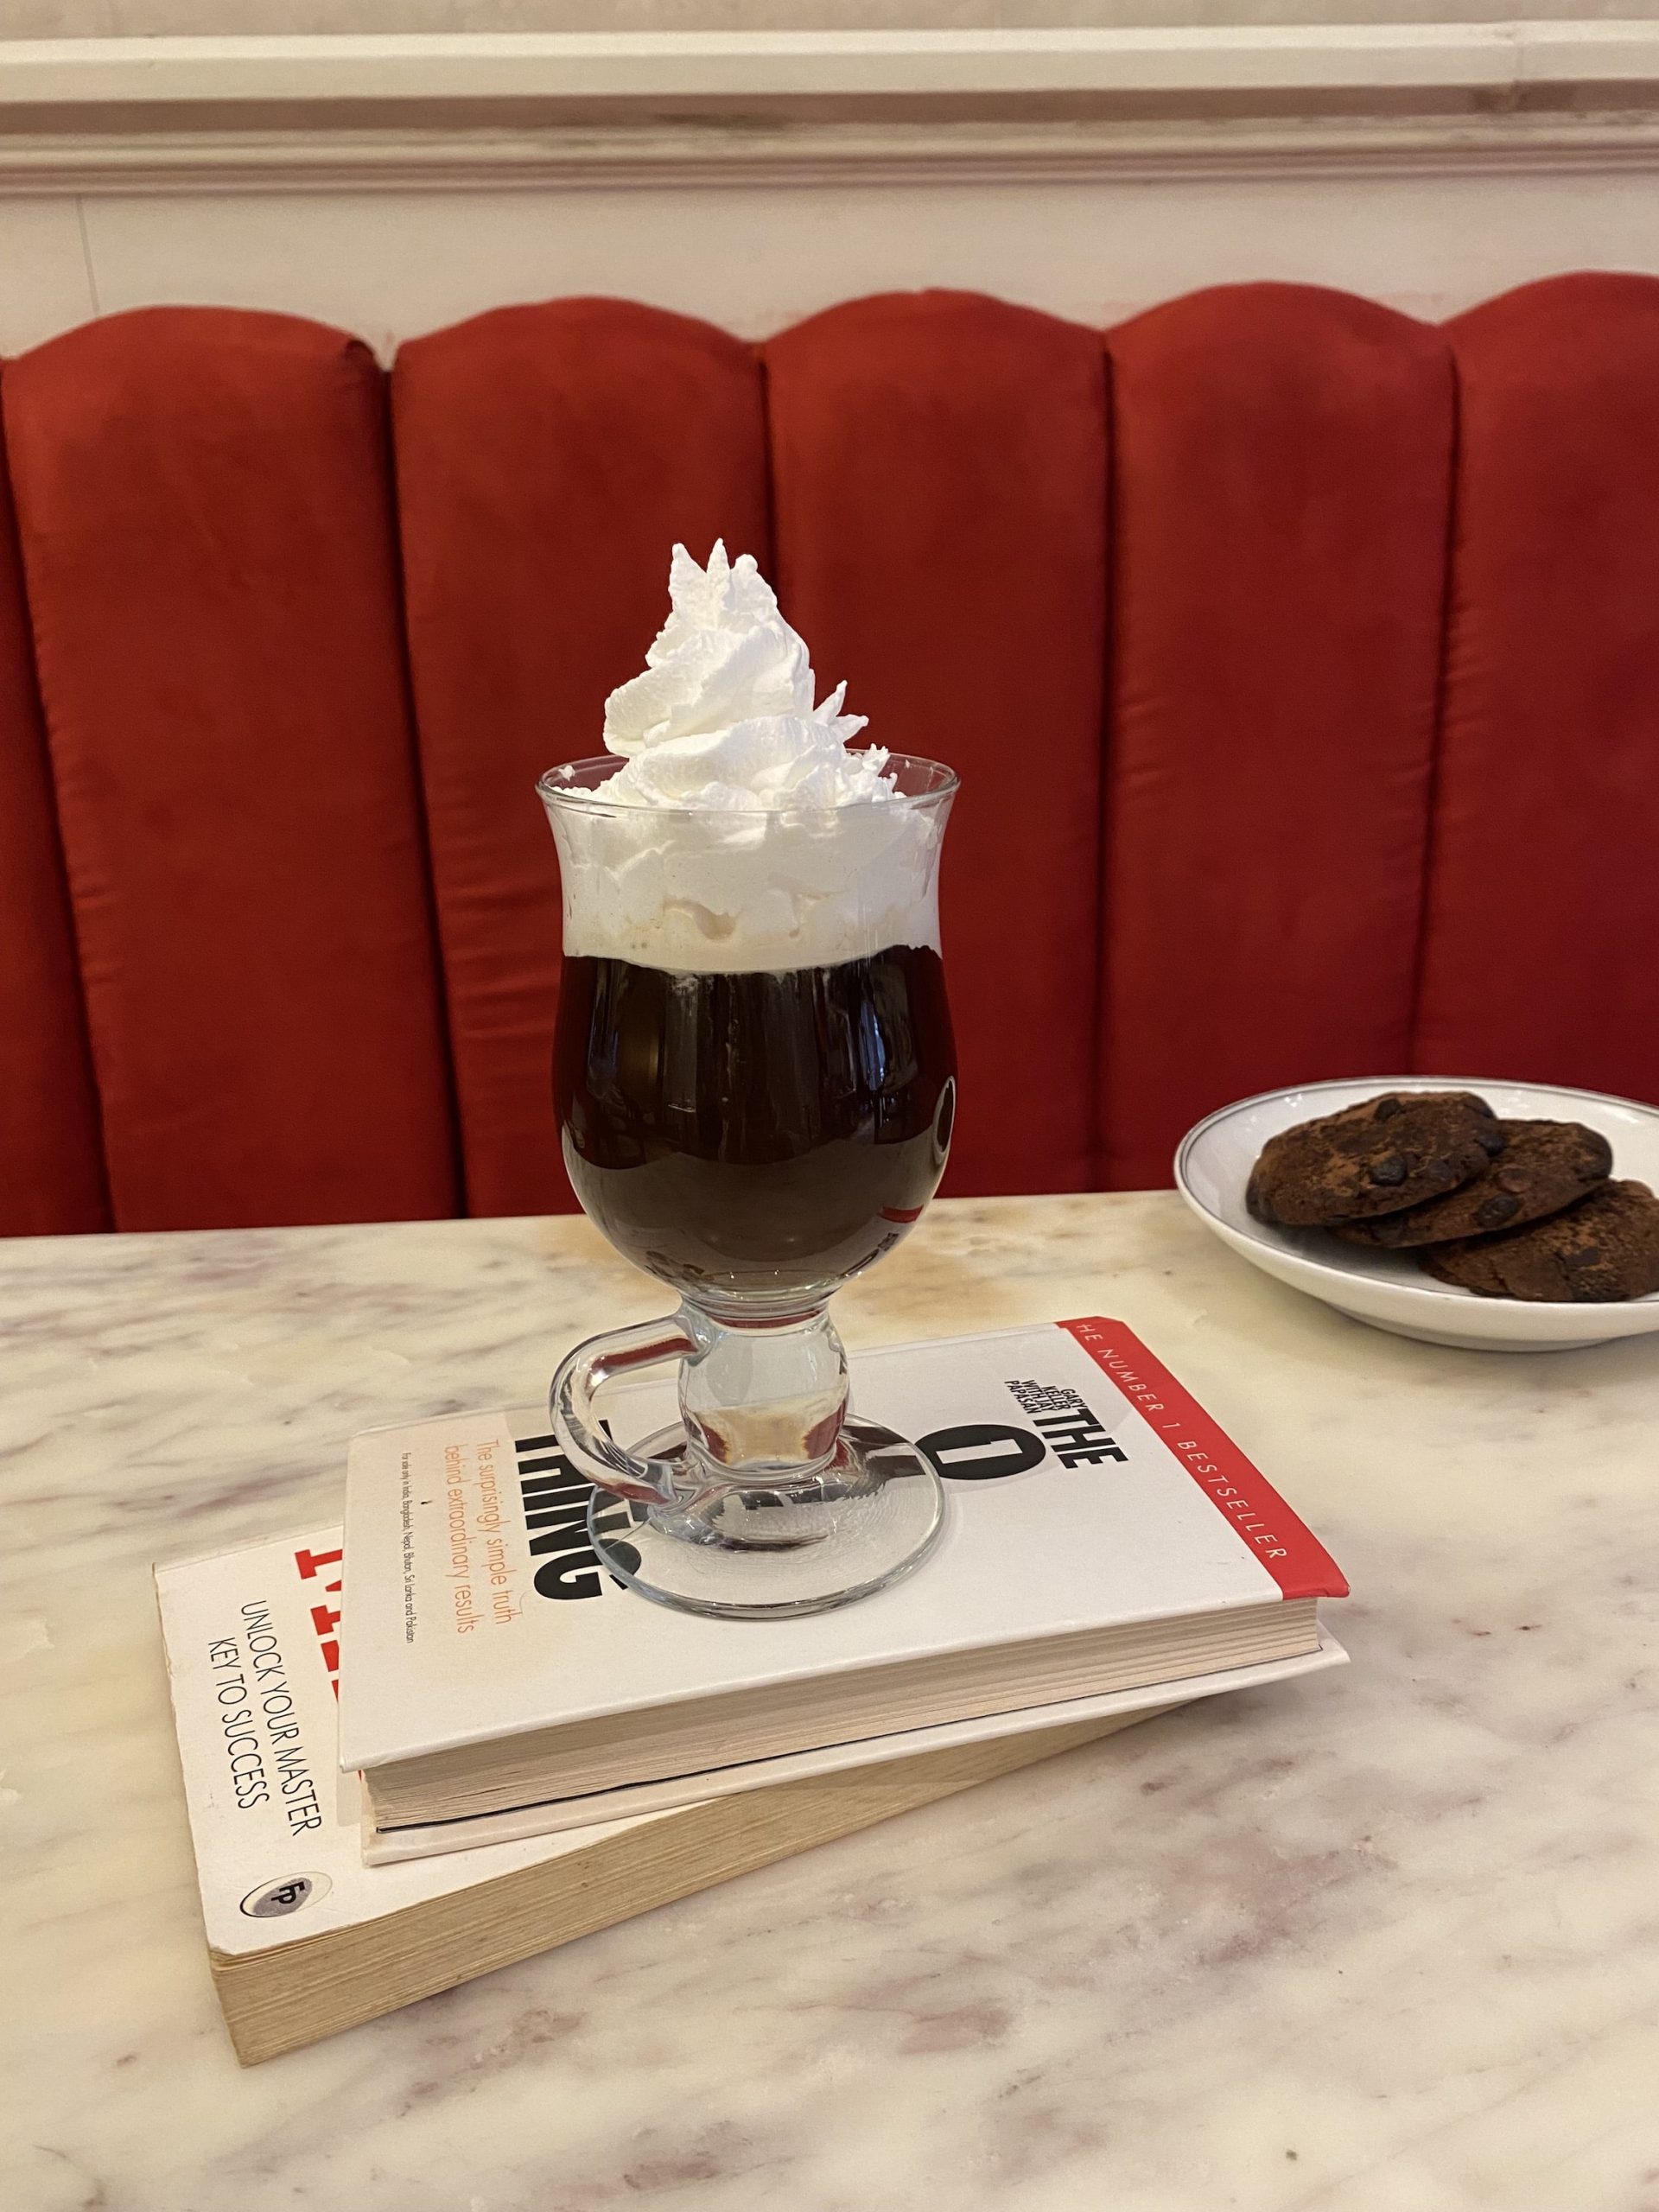 Cafe Noir Presents A Monsoon Dessert Affair Alongside A Coffee Month Celebration